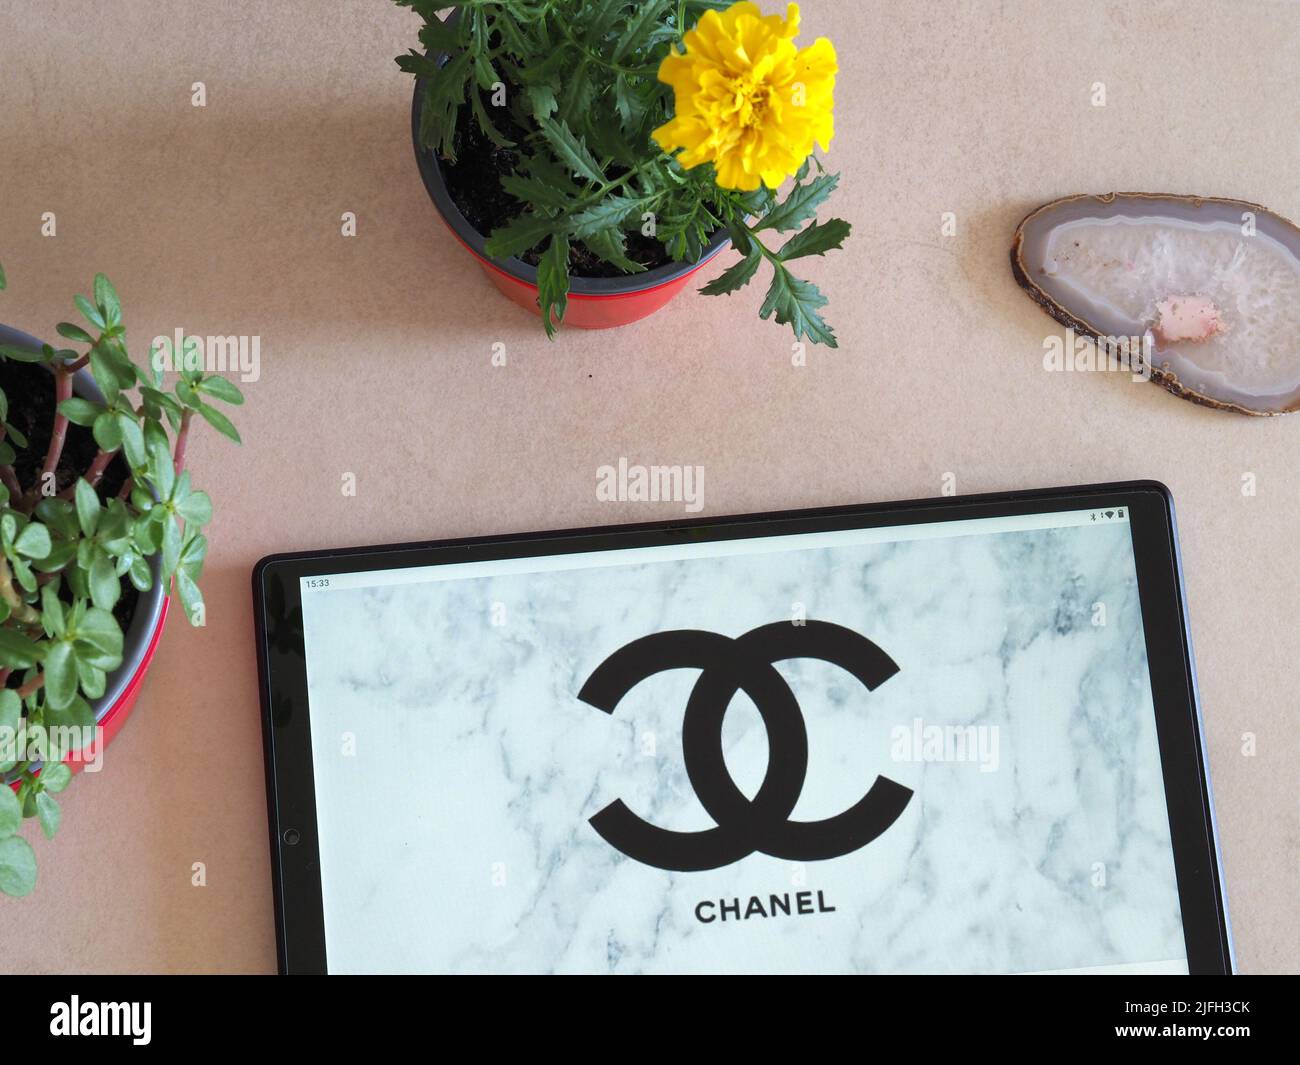 Chanel s a fotografías e imágenes de alta resolución - Alamy